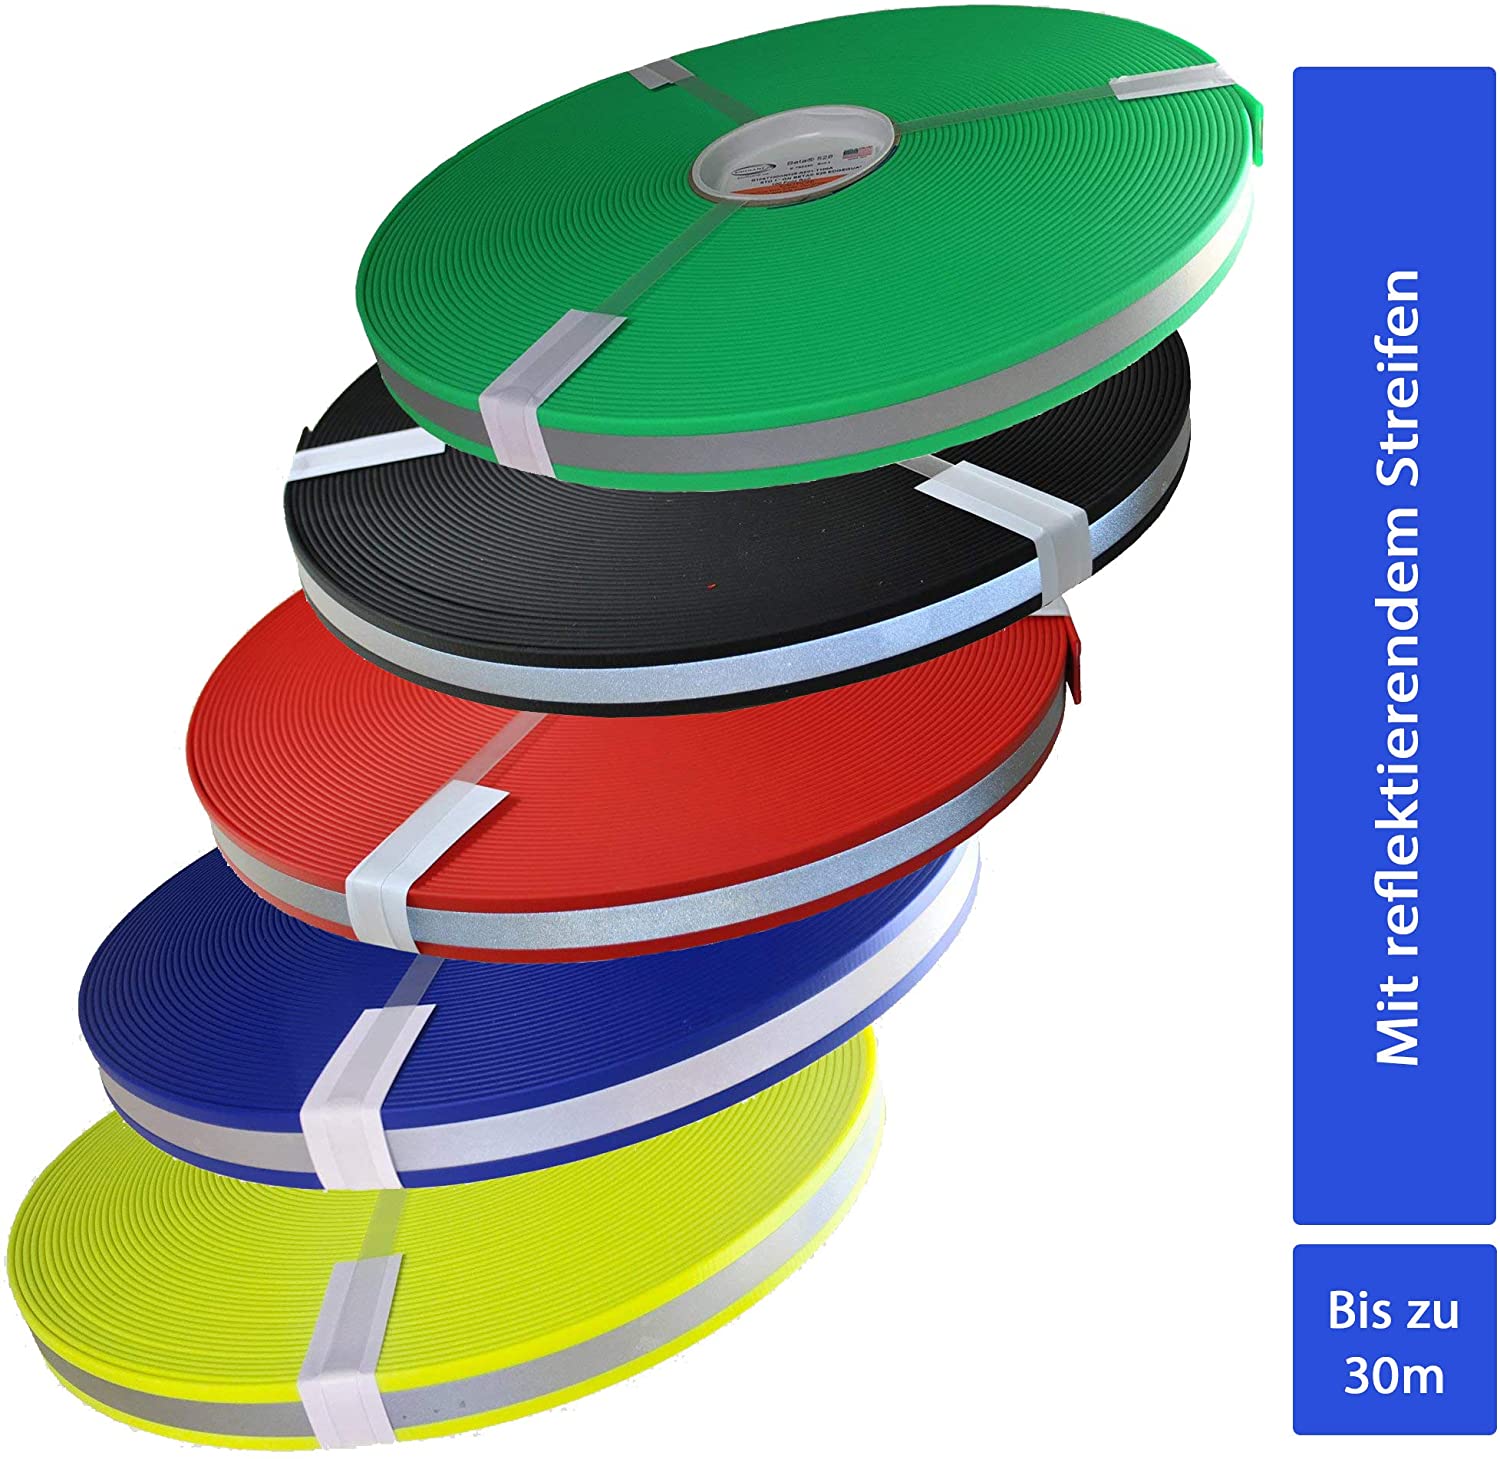  Beta biothane® con reflectante) Tiras con reflectante 20 colores y 2 anchos 